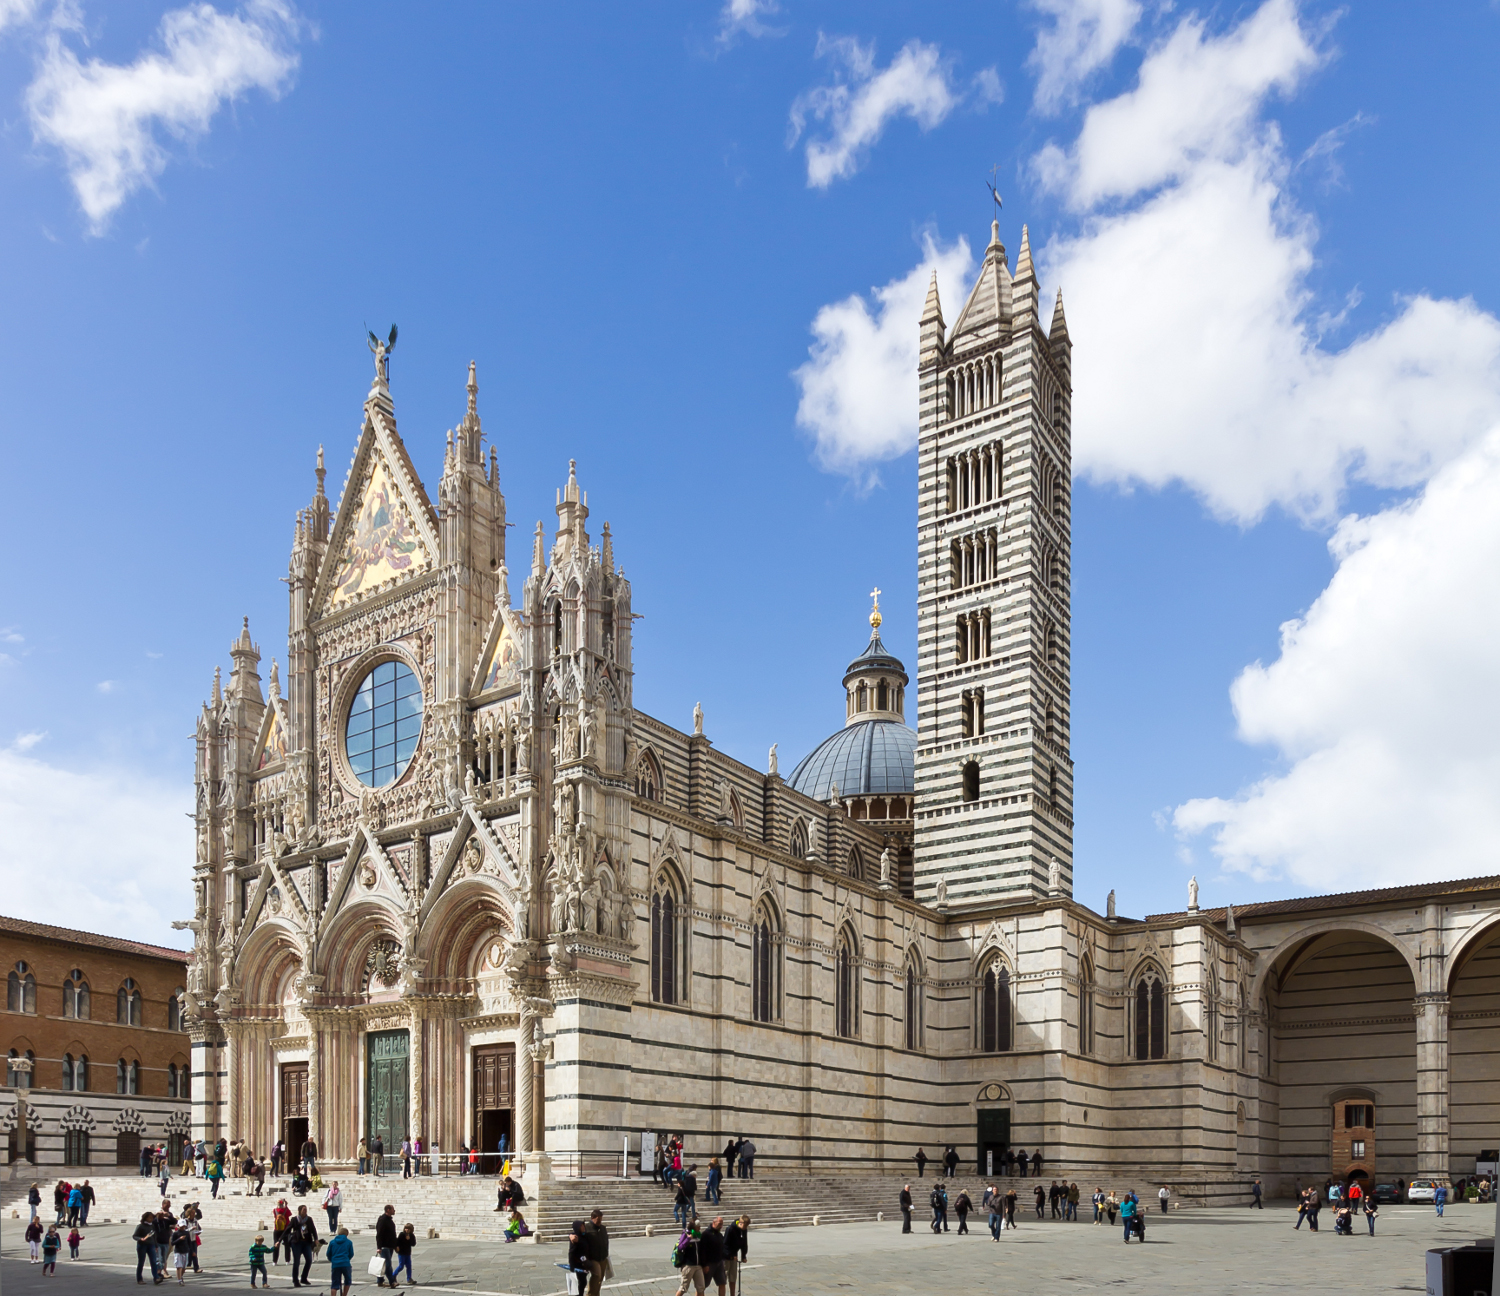 http://www.net4info.de/photos/cpg/albums/userpics/10002/Duomo_di_Siena.jpg